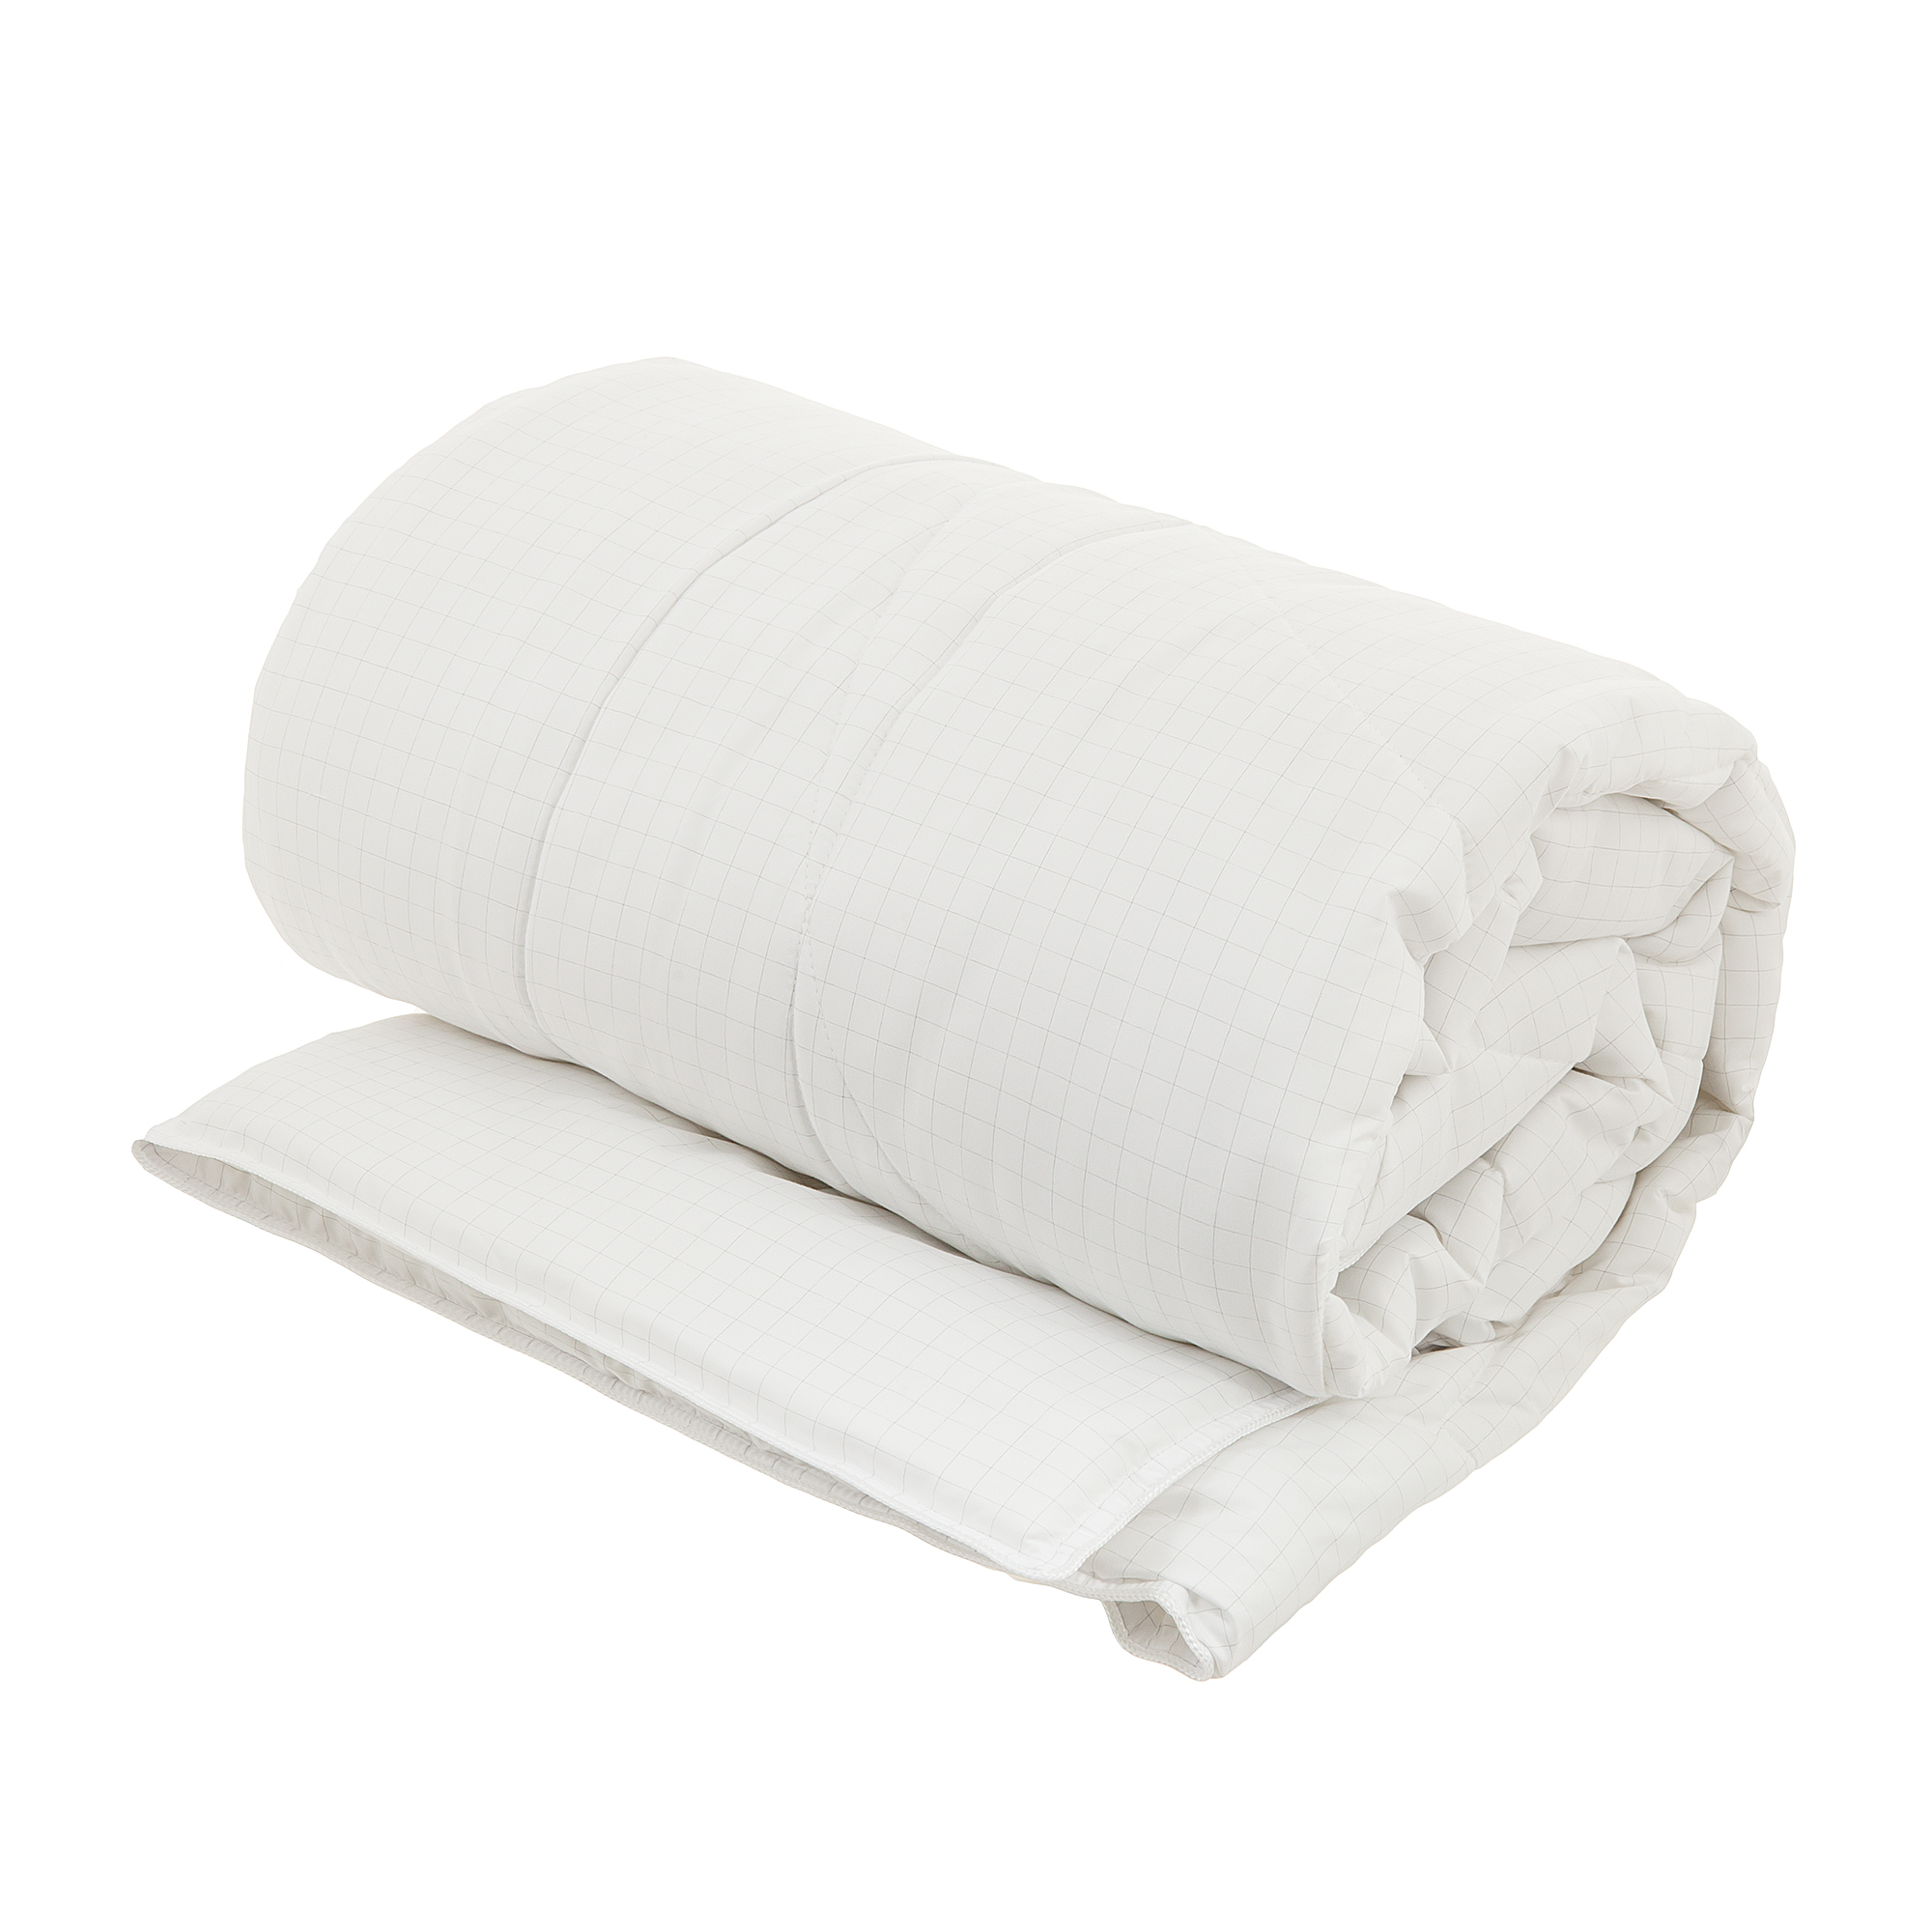 одеяло togas саммин белое 200х210 см Одеяло Togas Либра 200х210 см